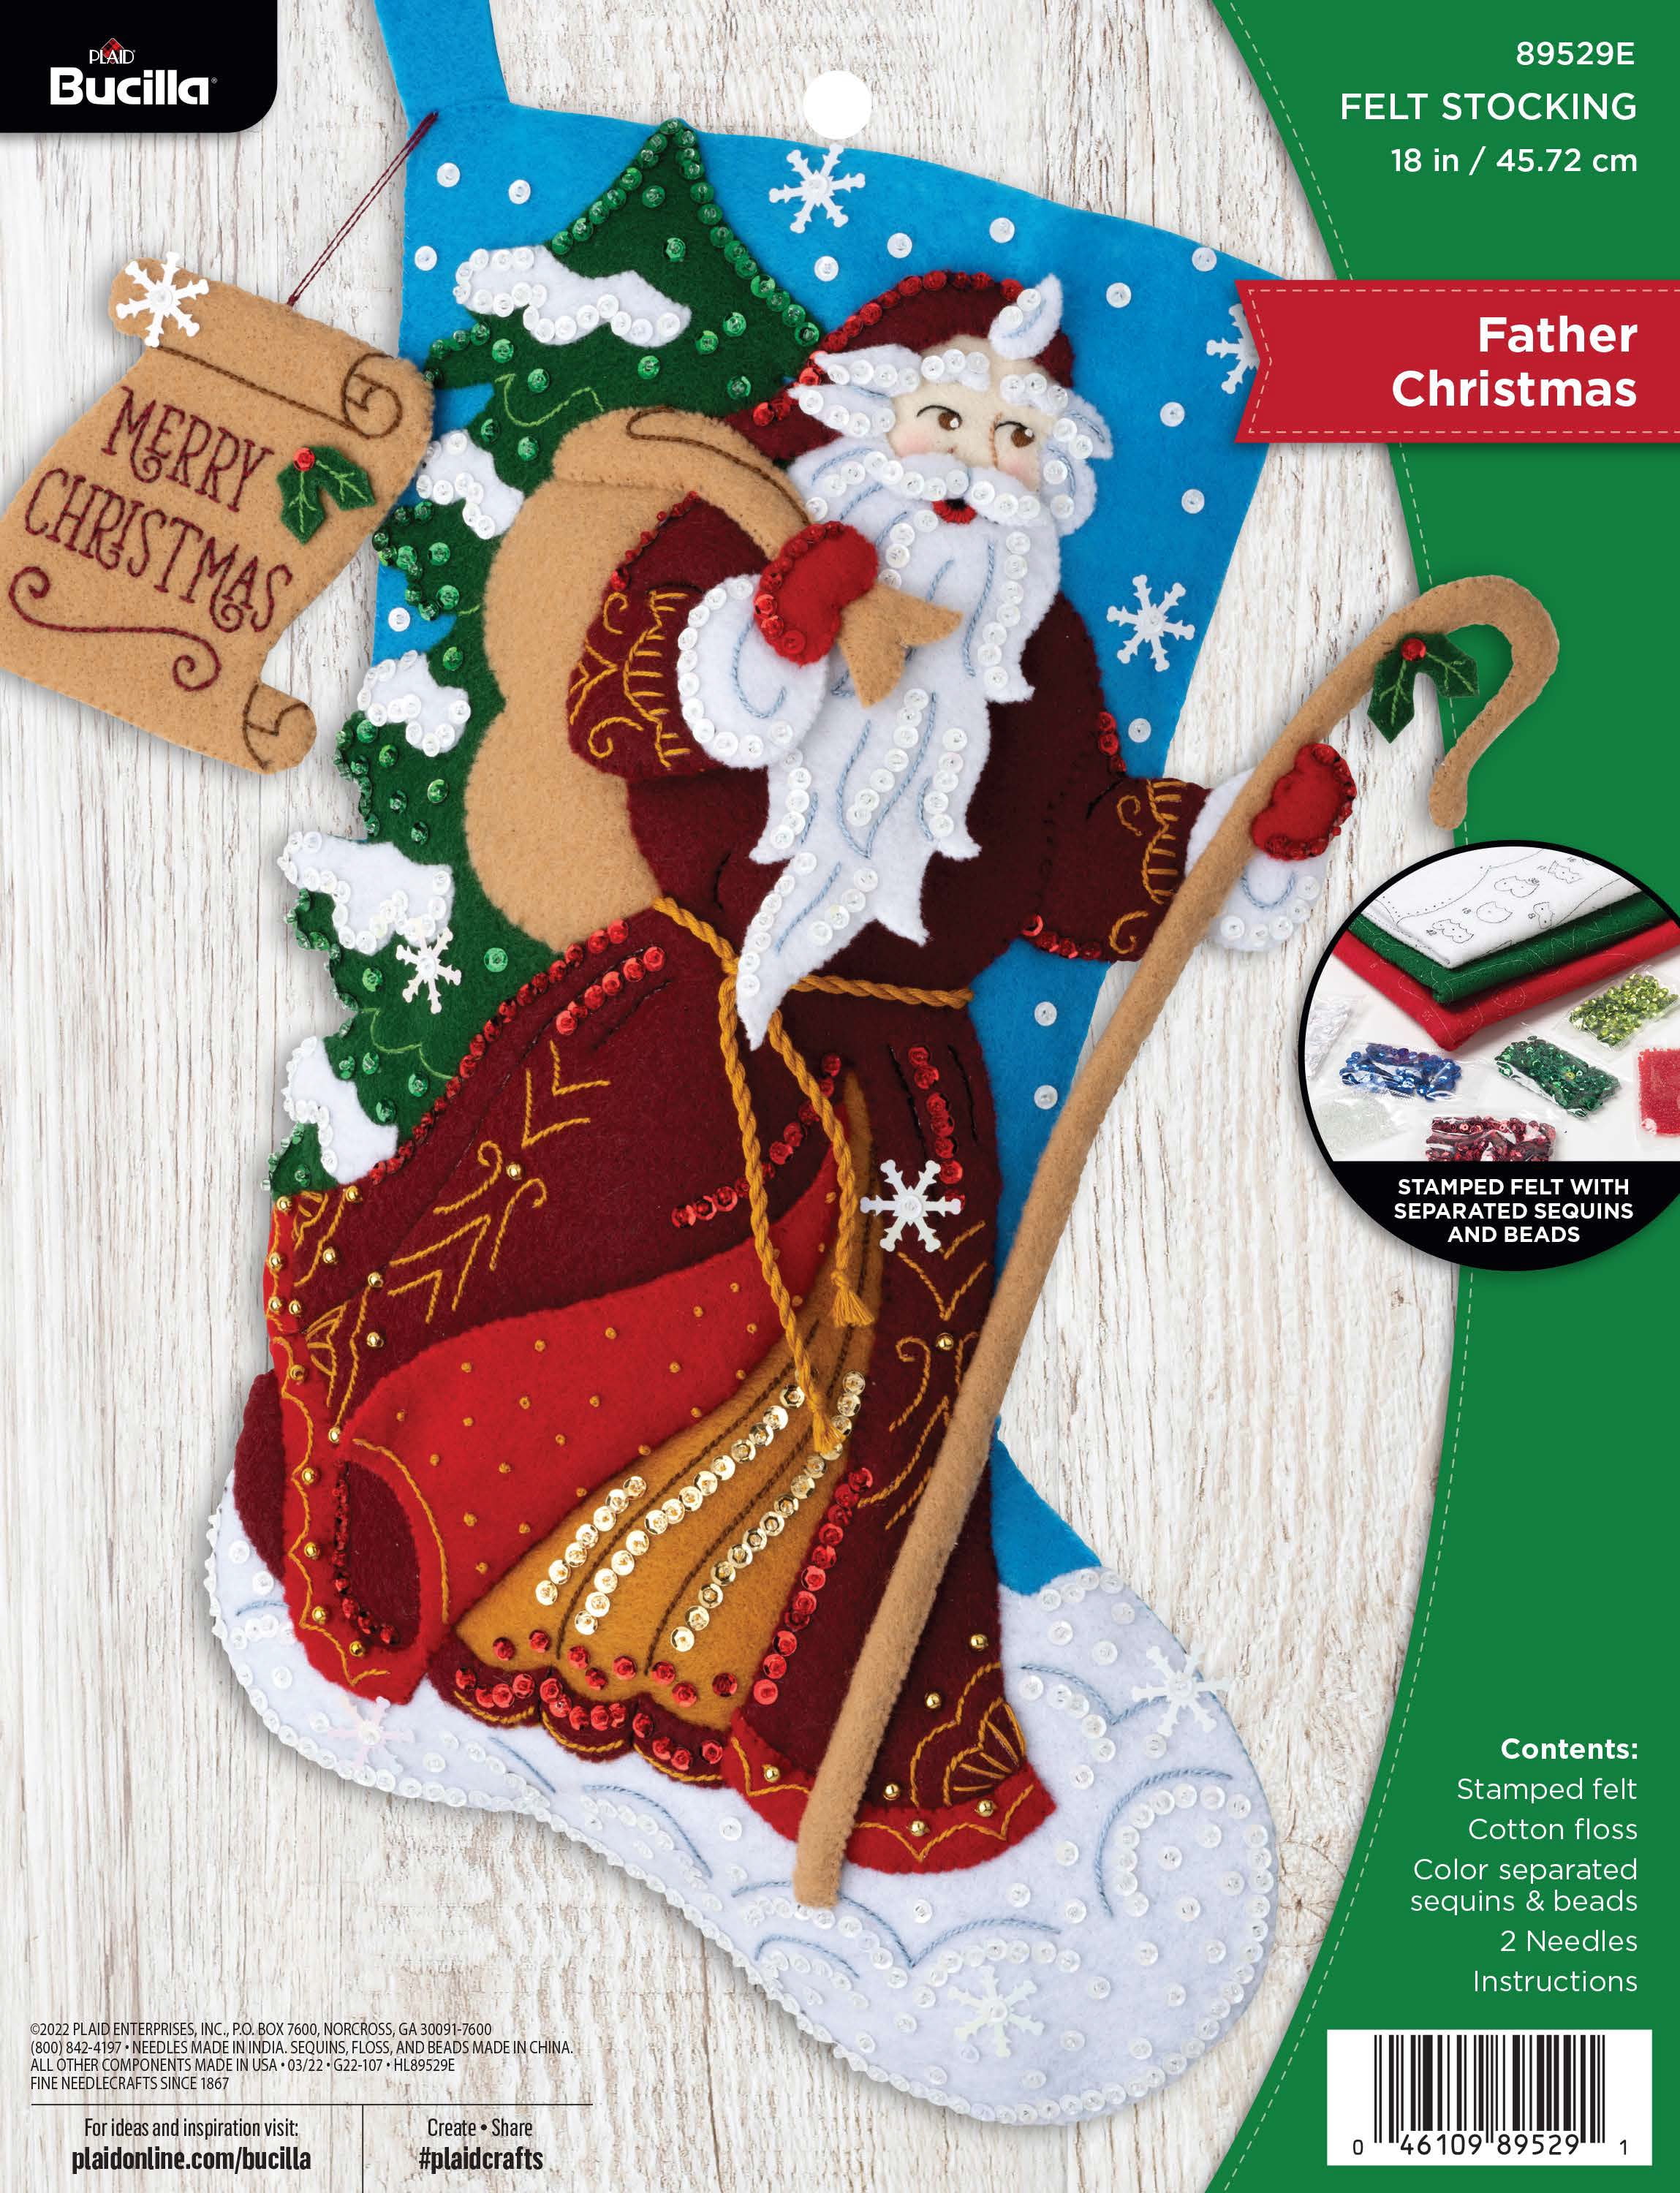 Bucilla Felt Stocking Applique Kit 18 Long-Santa's Visit, 1 - Mariano's